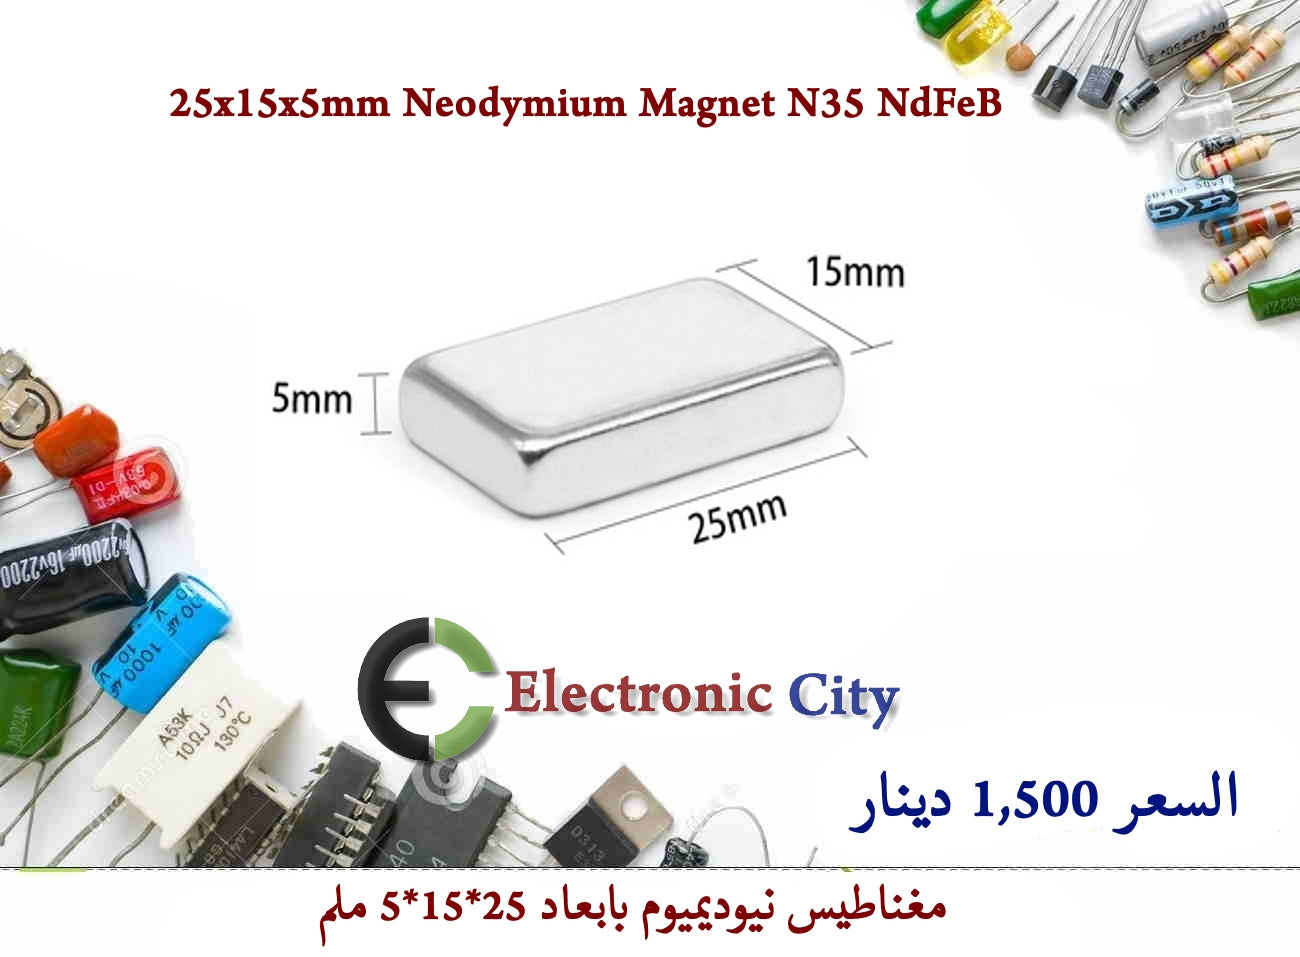 25x15x5mm Neodymium Magnet N35 NdFeB